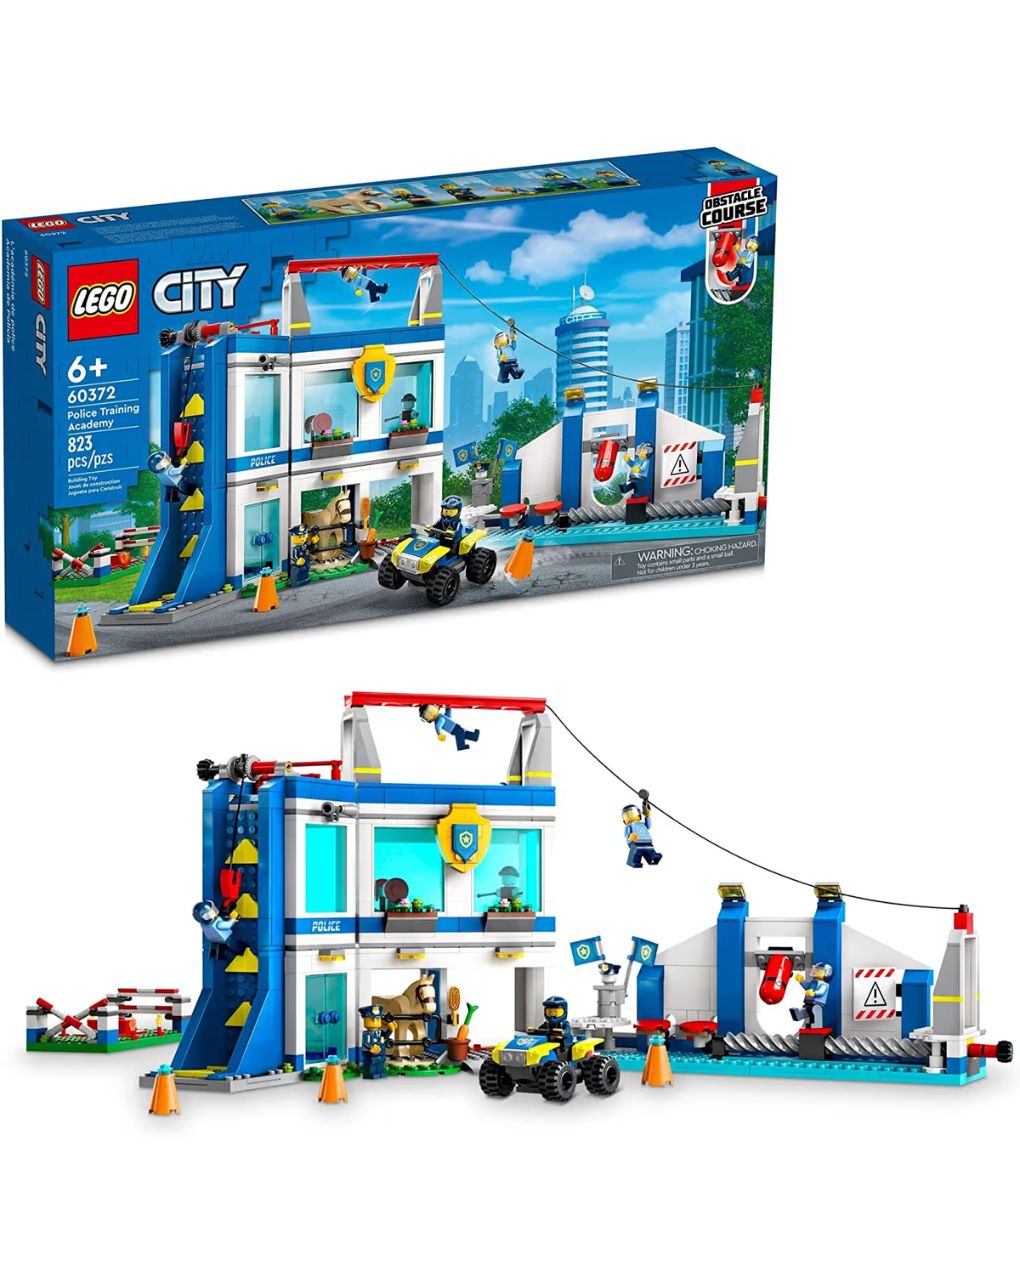 Lego city police training academy 60372